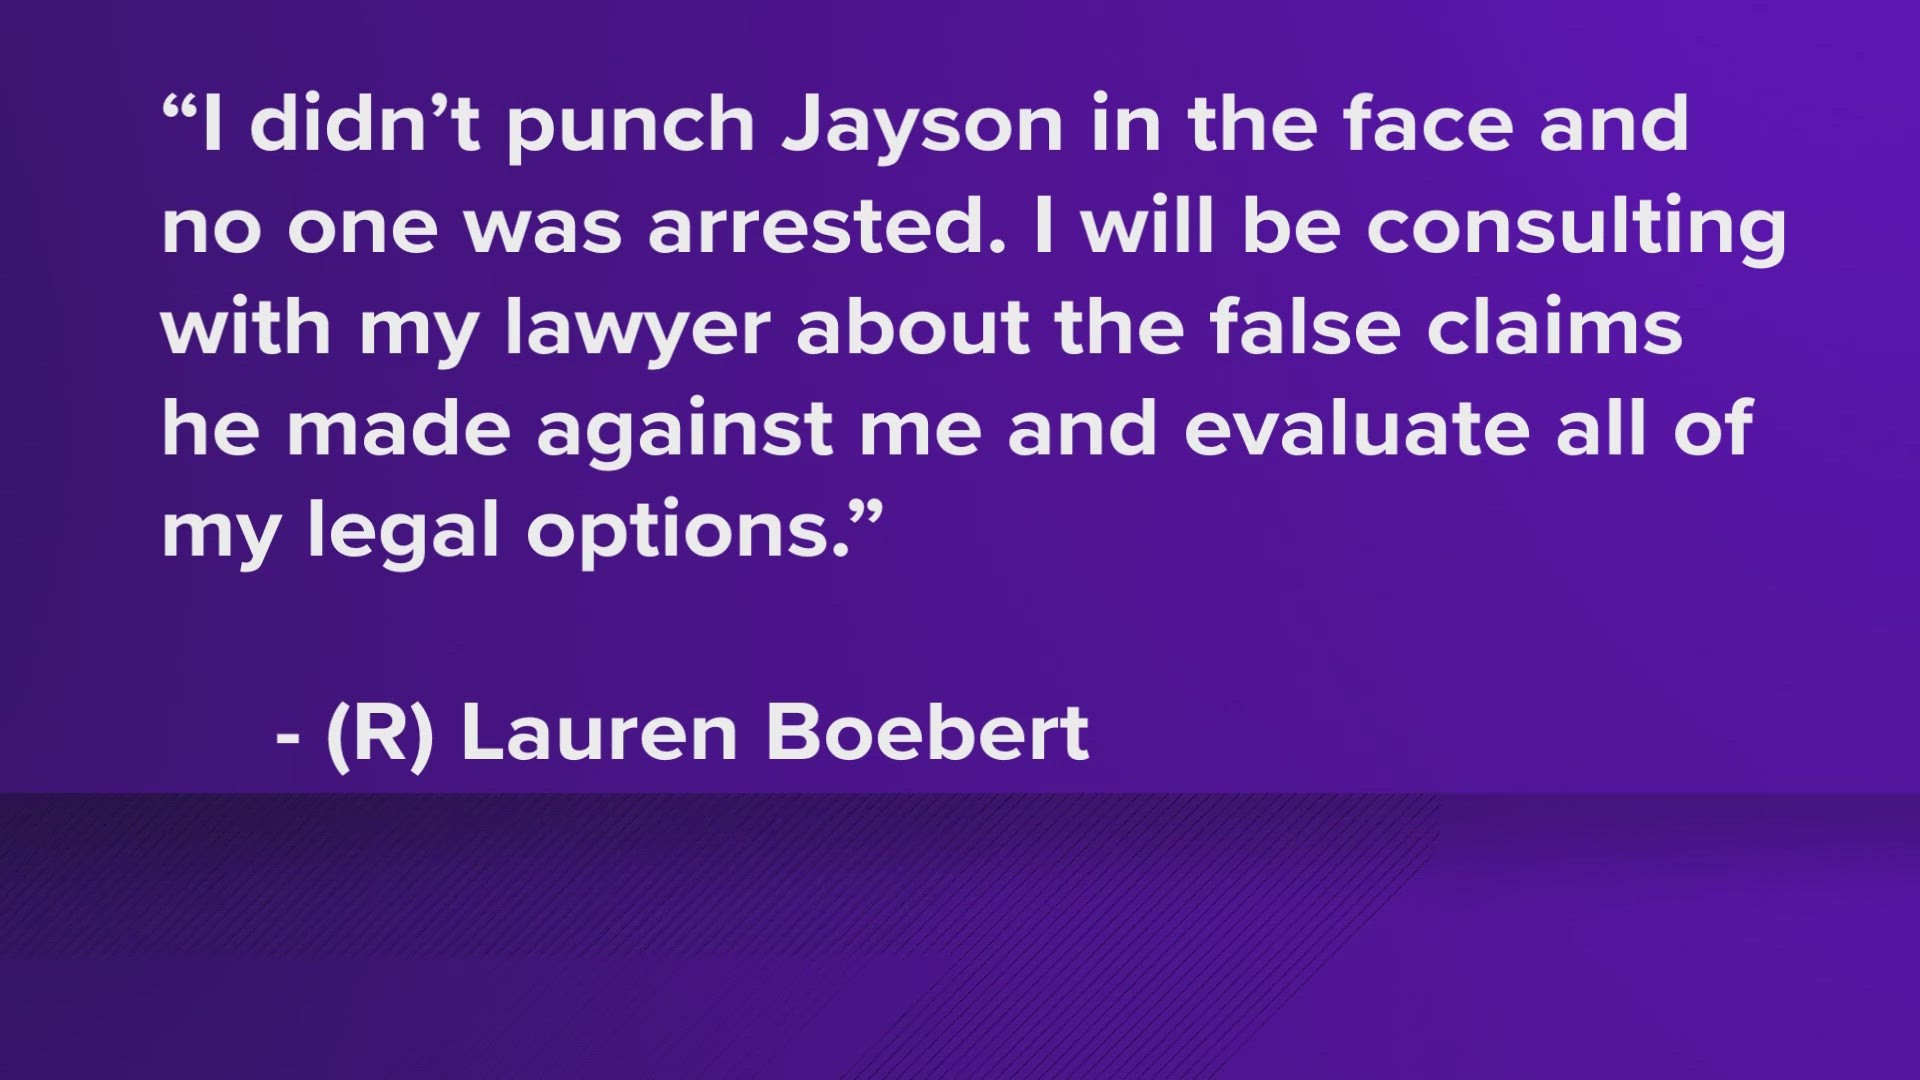 On Saturday night, Silt police responded to an incident involving Republican Congresswoman Lauren Boebert and her ex-husband, Jayson Boebert.